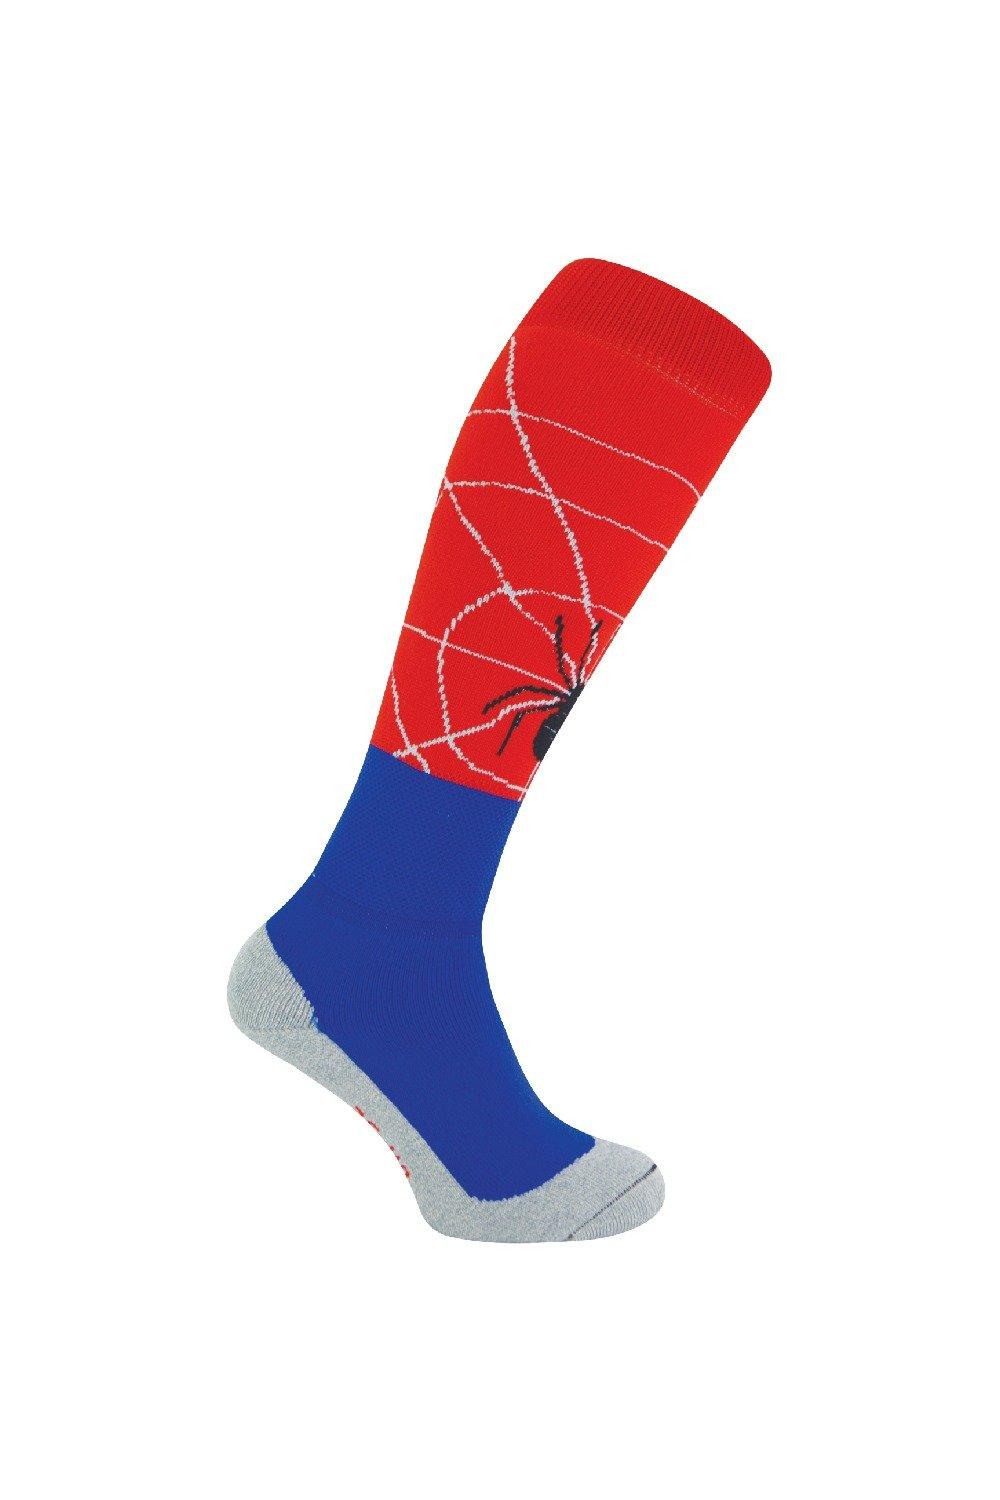 Spiderman Sport Long Hockey, Rugby & Football Socks